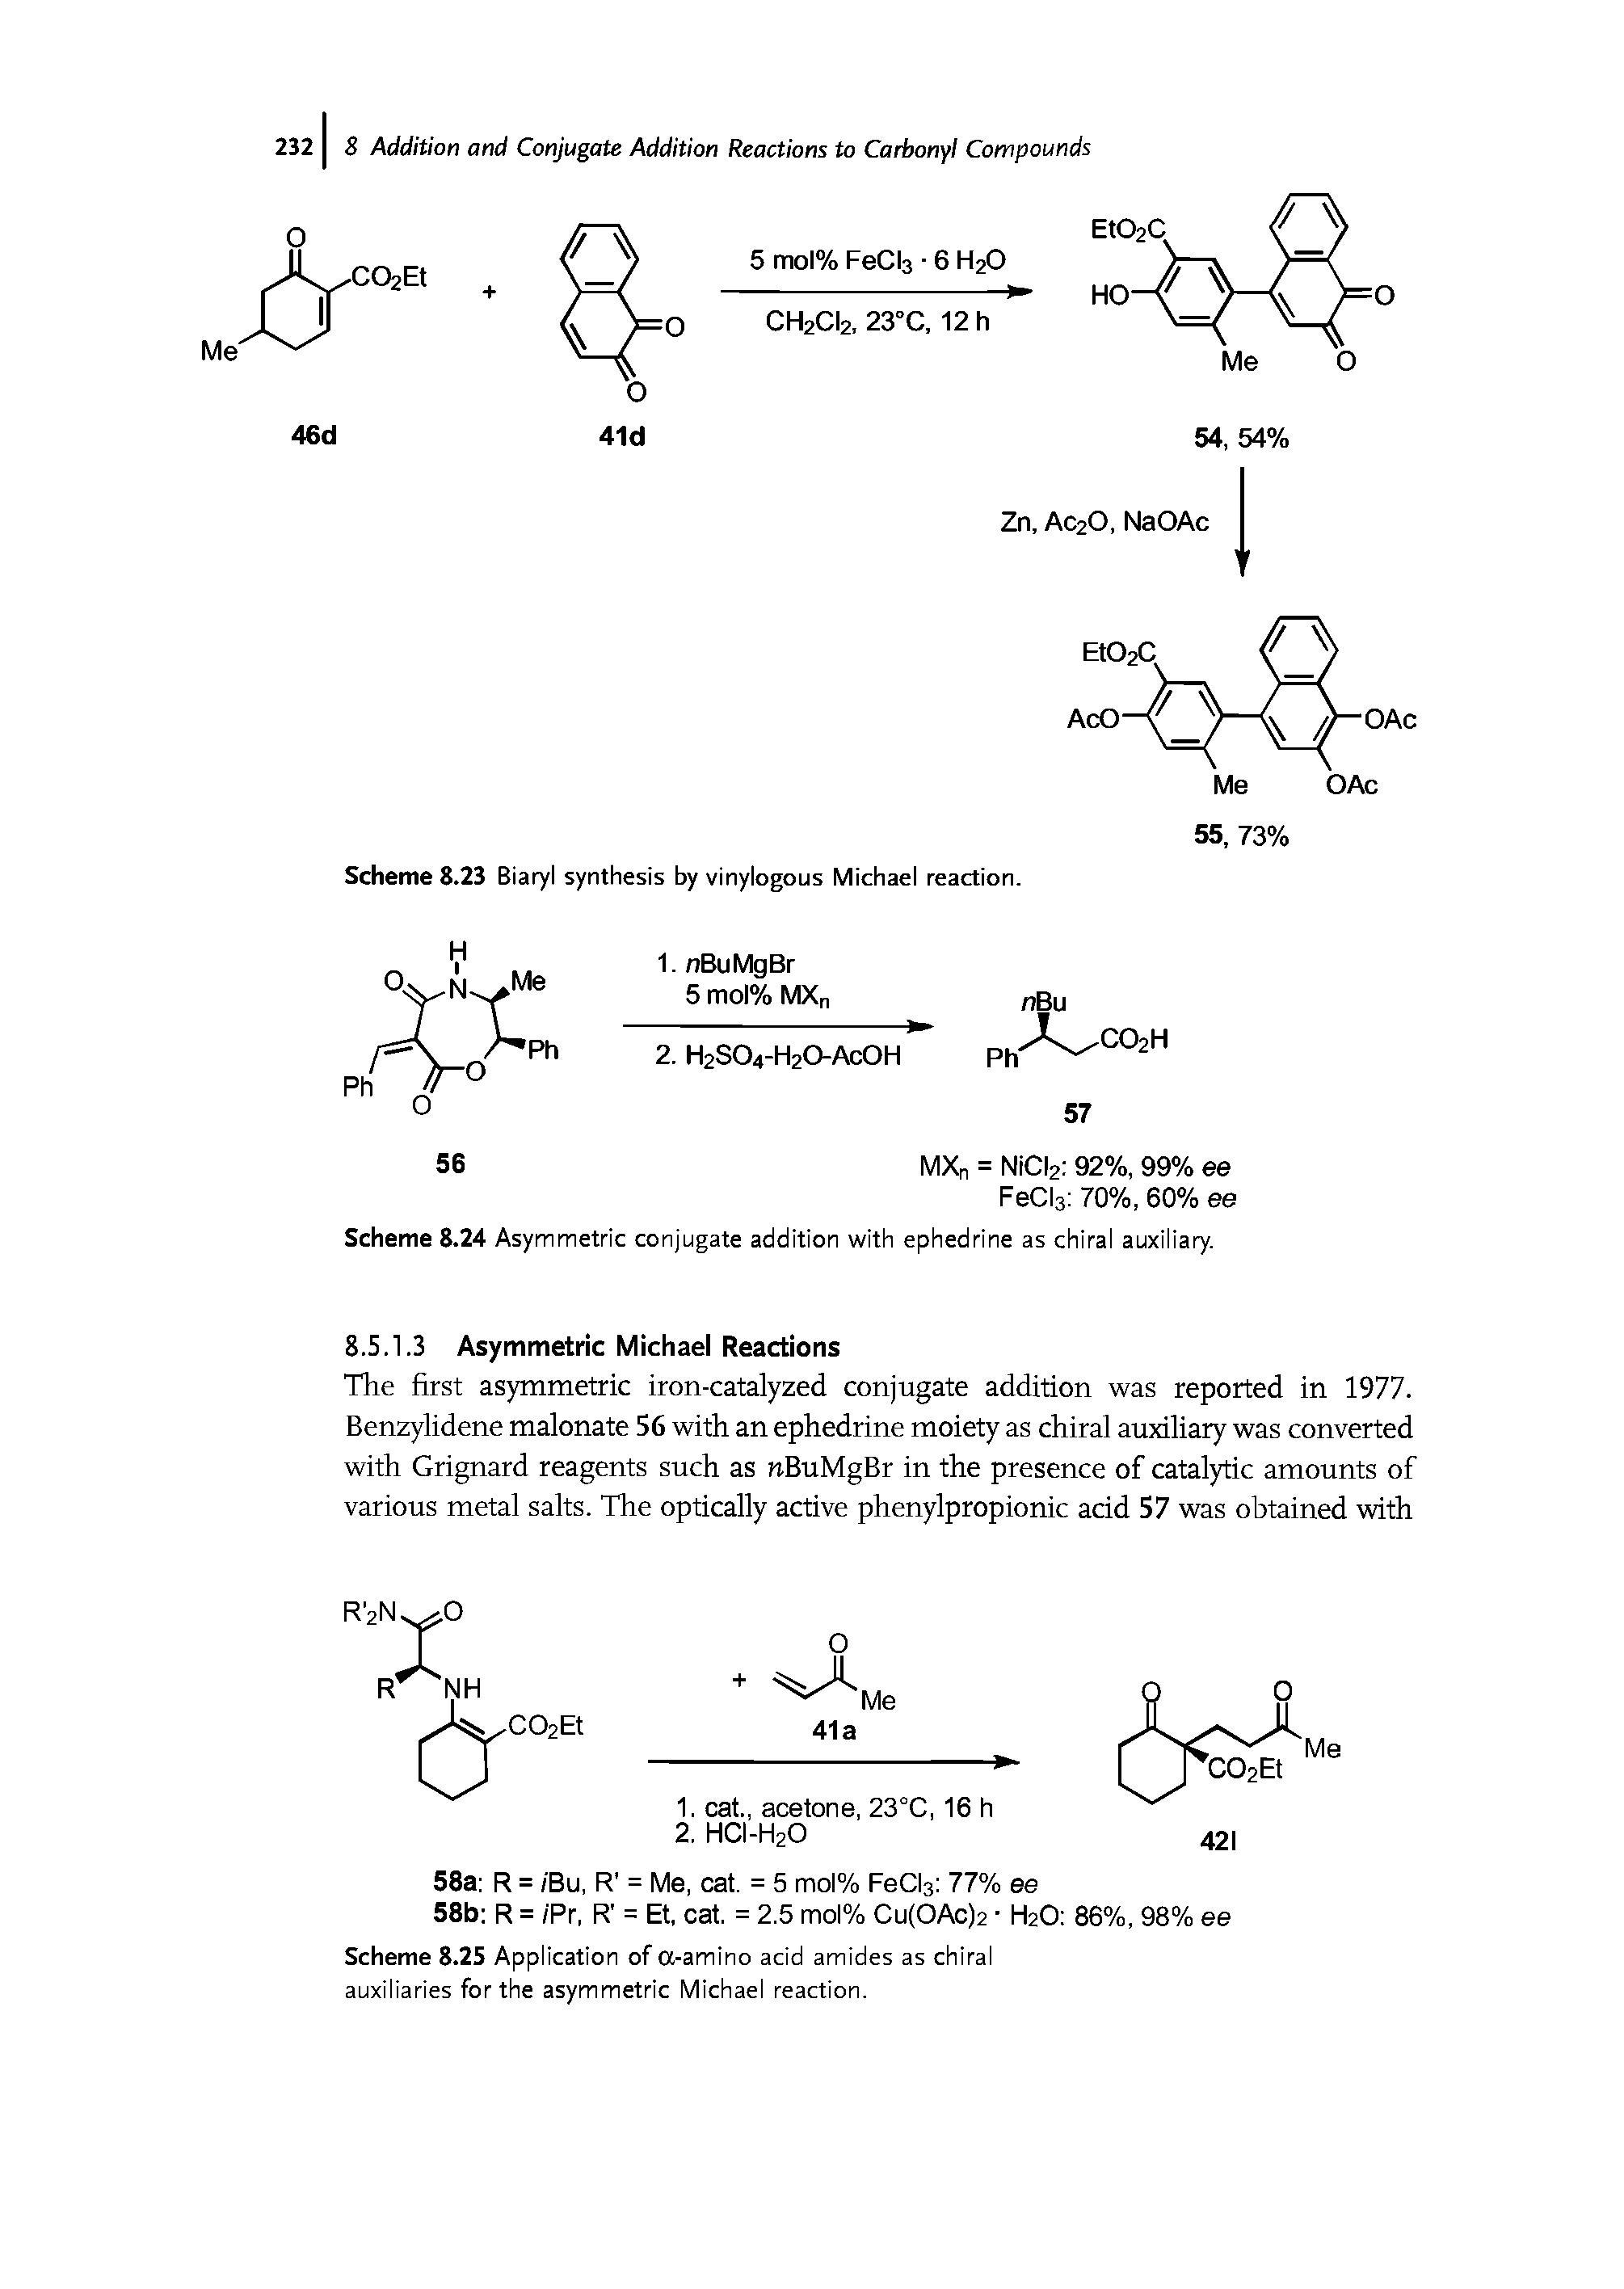 Scheme 8.23 Biaryl synthesis by vinylogous Michael reaction.